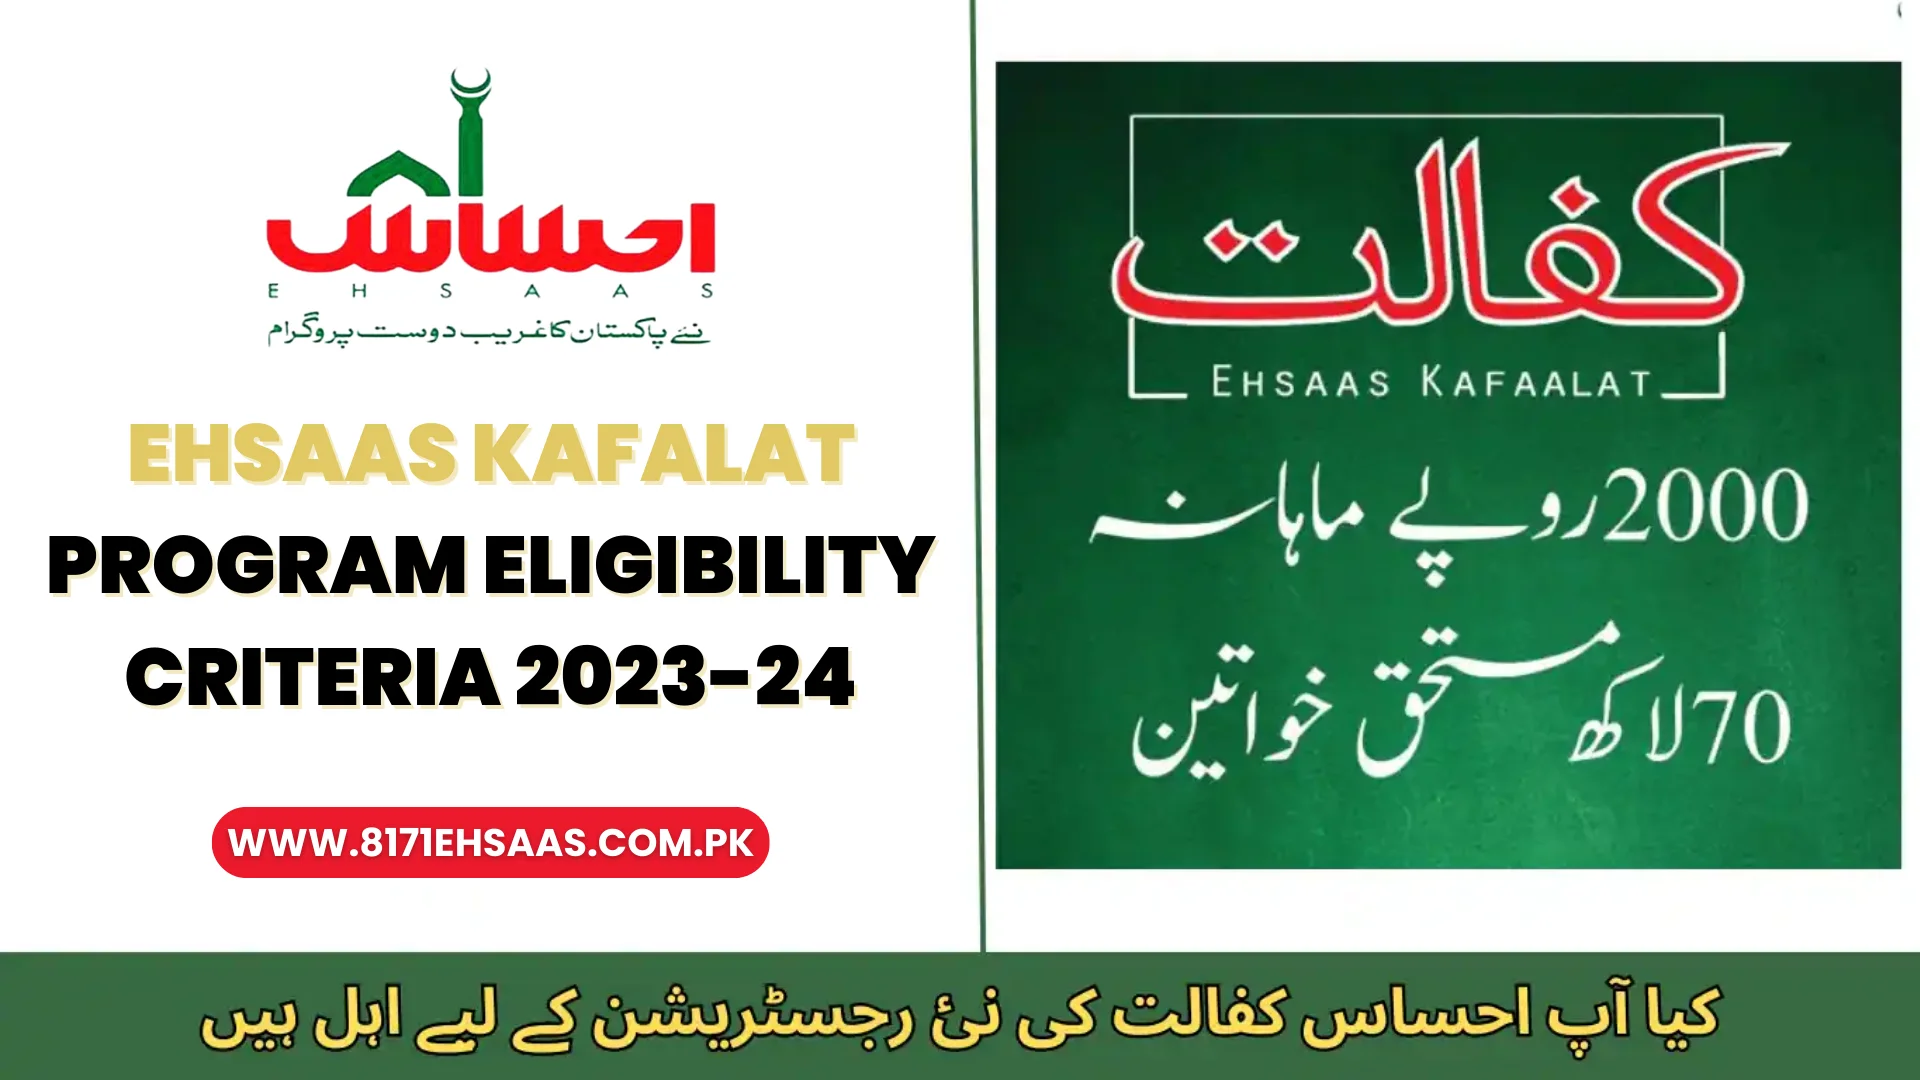 Ehsaas Kafalat Program Eligibility criteria 2023-24